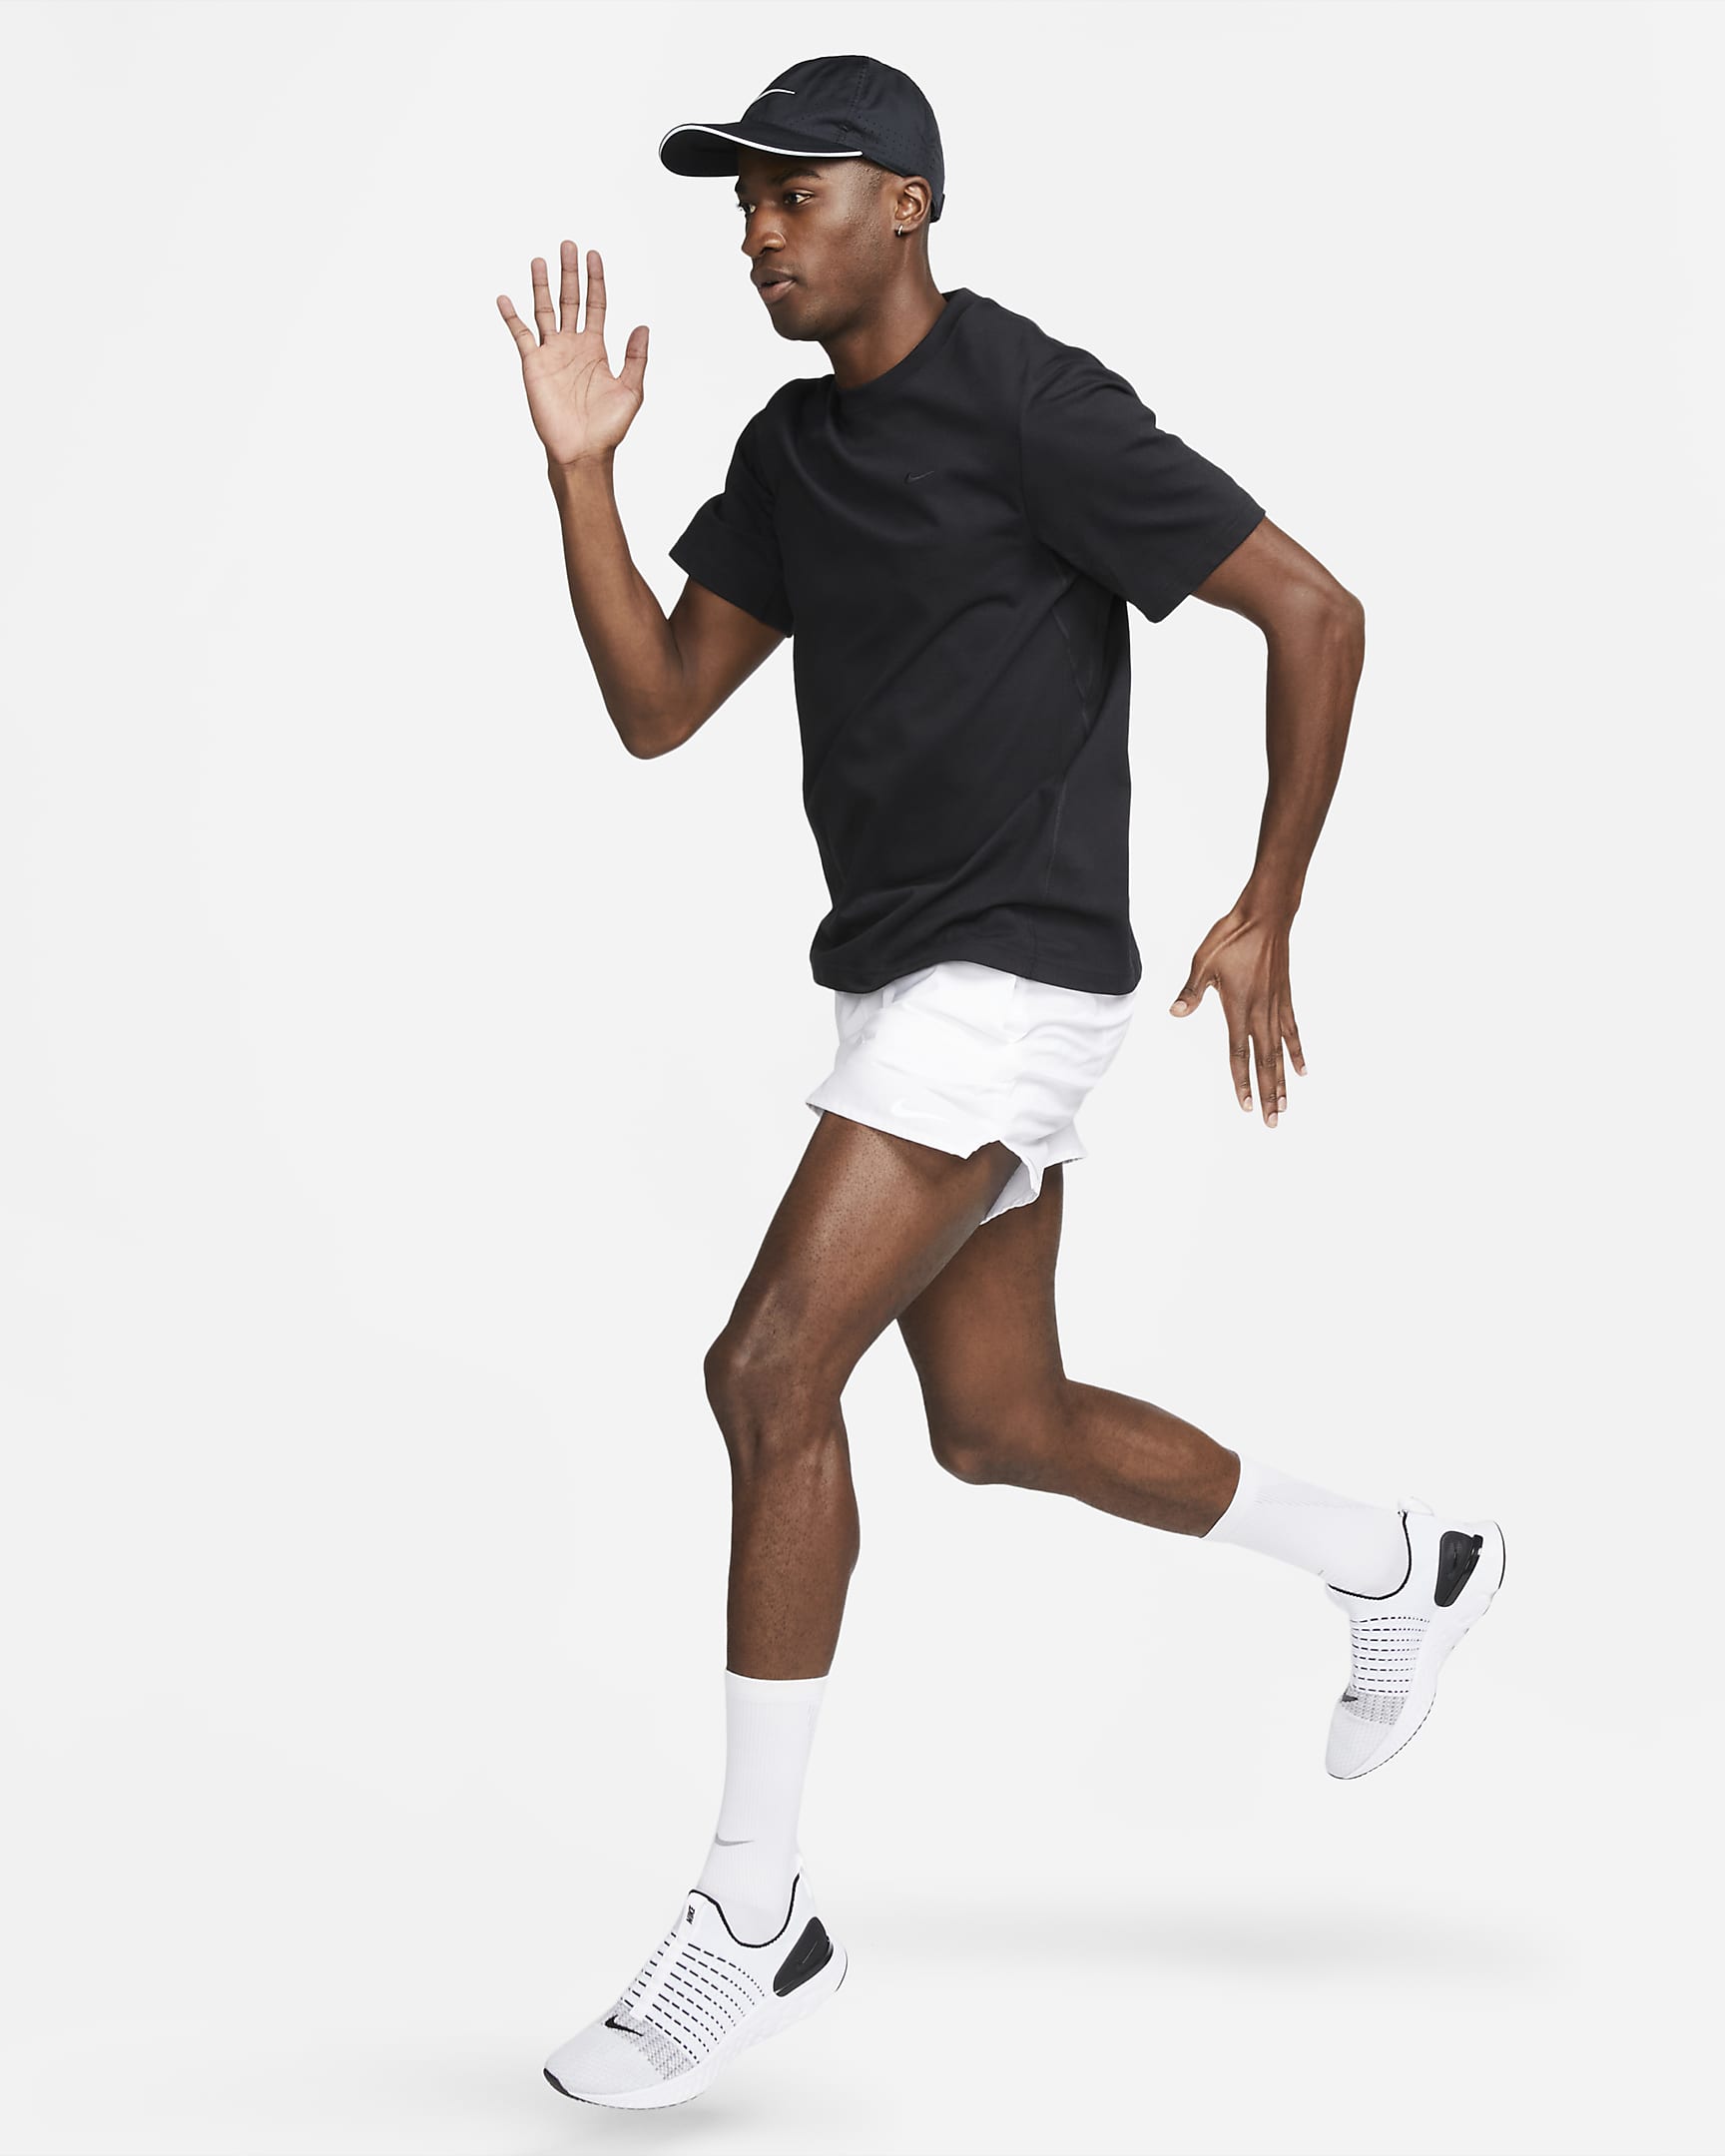 Nike Primary Men's Dri-FIT Short-sleeve Versatile Top - Black/Black